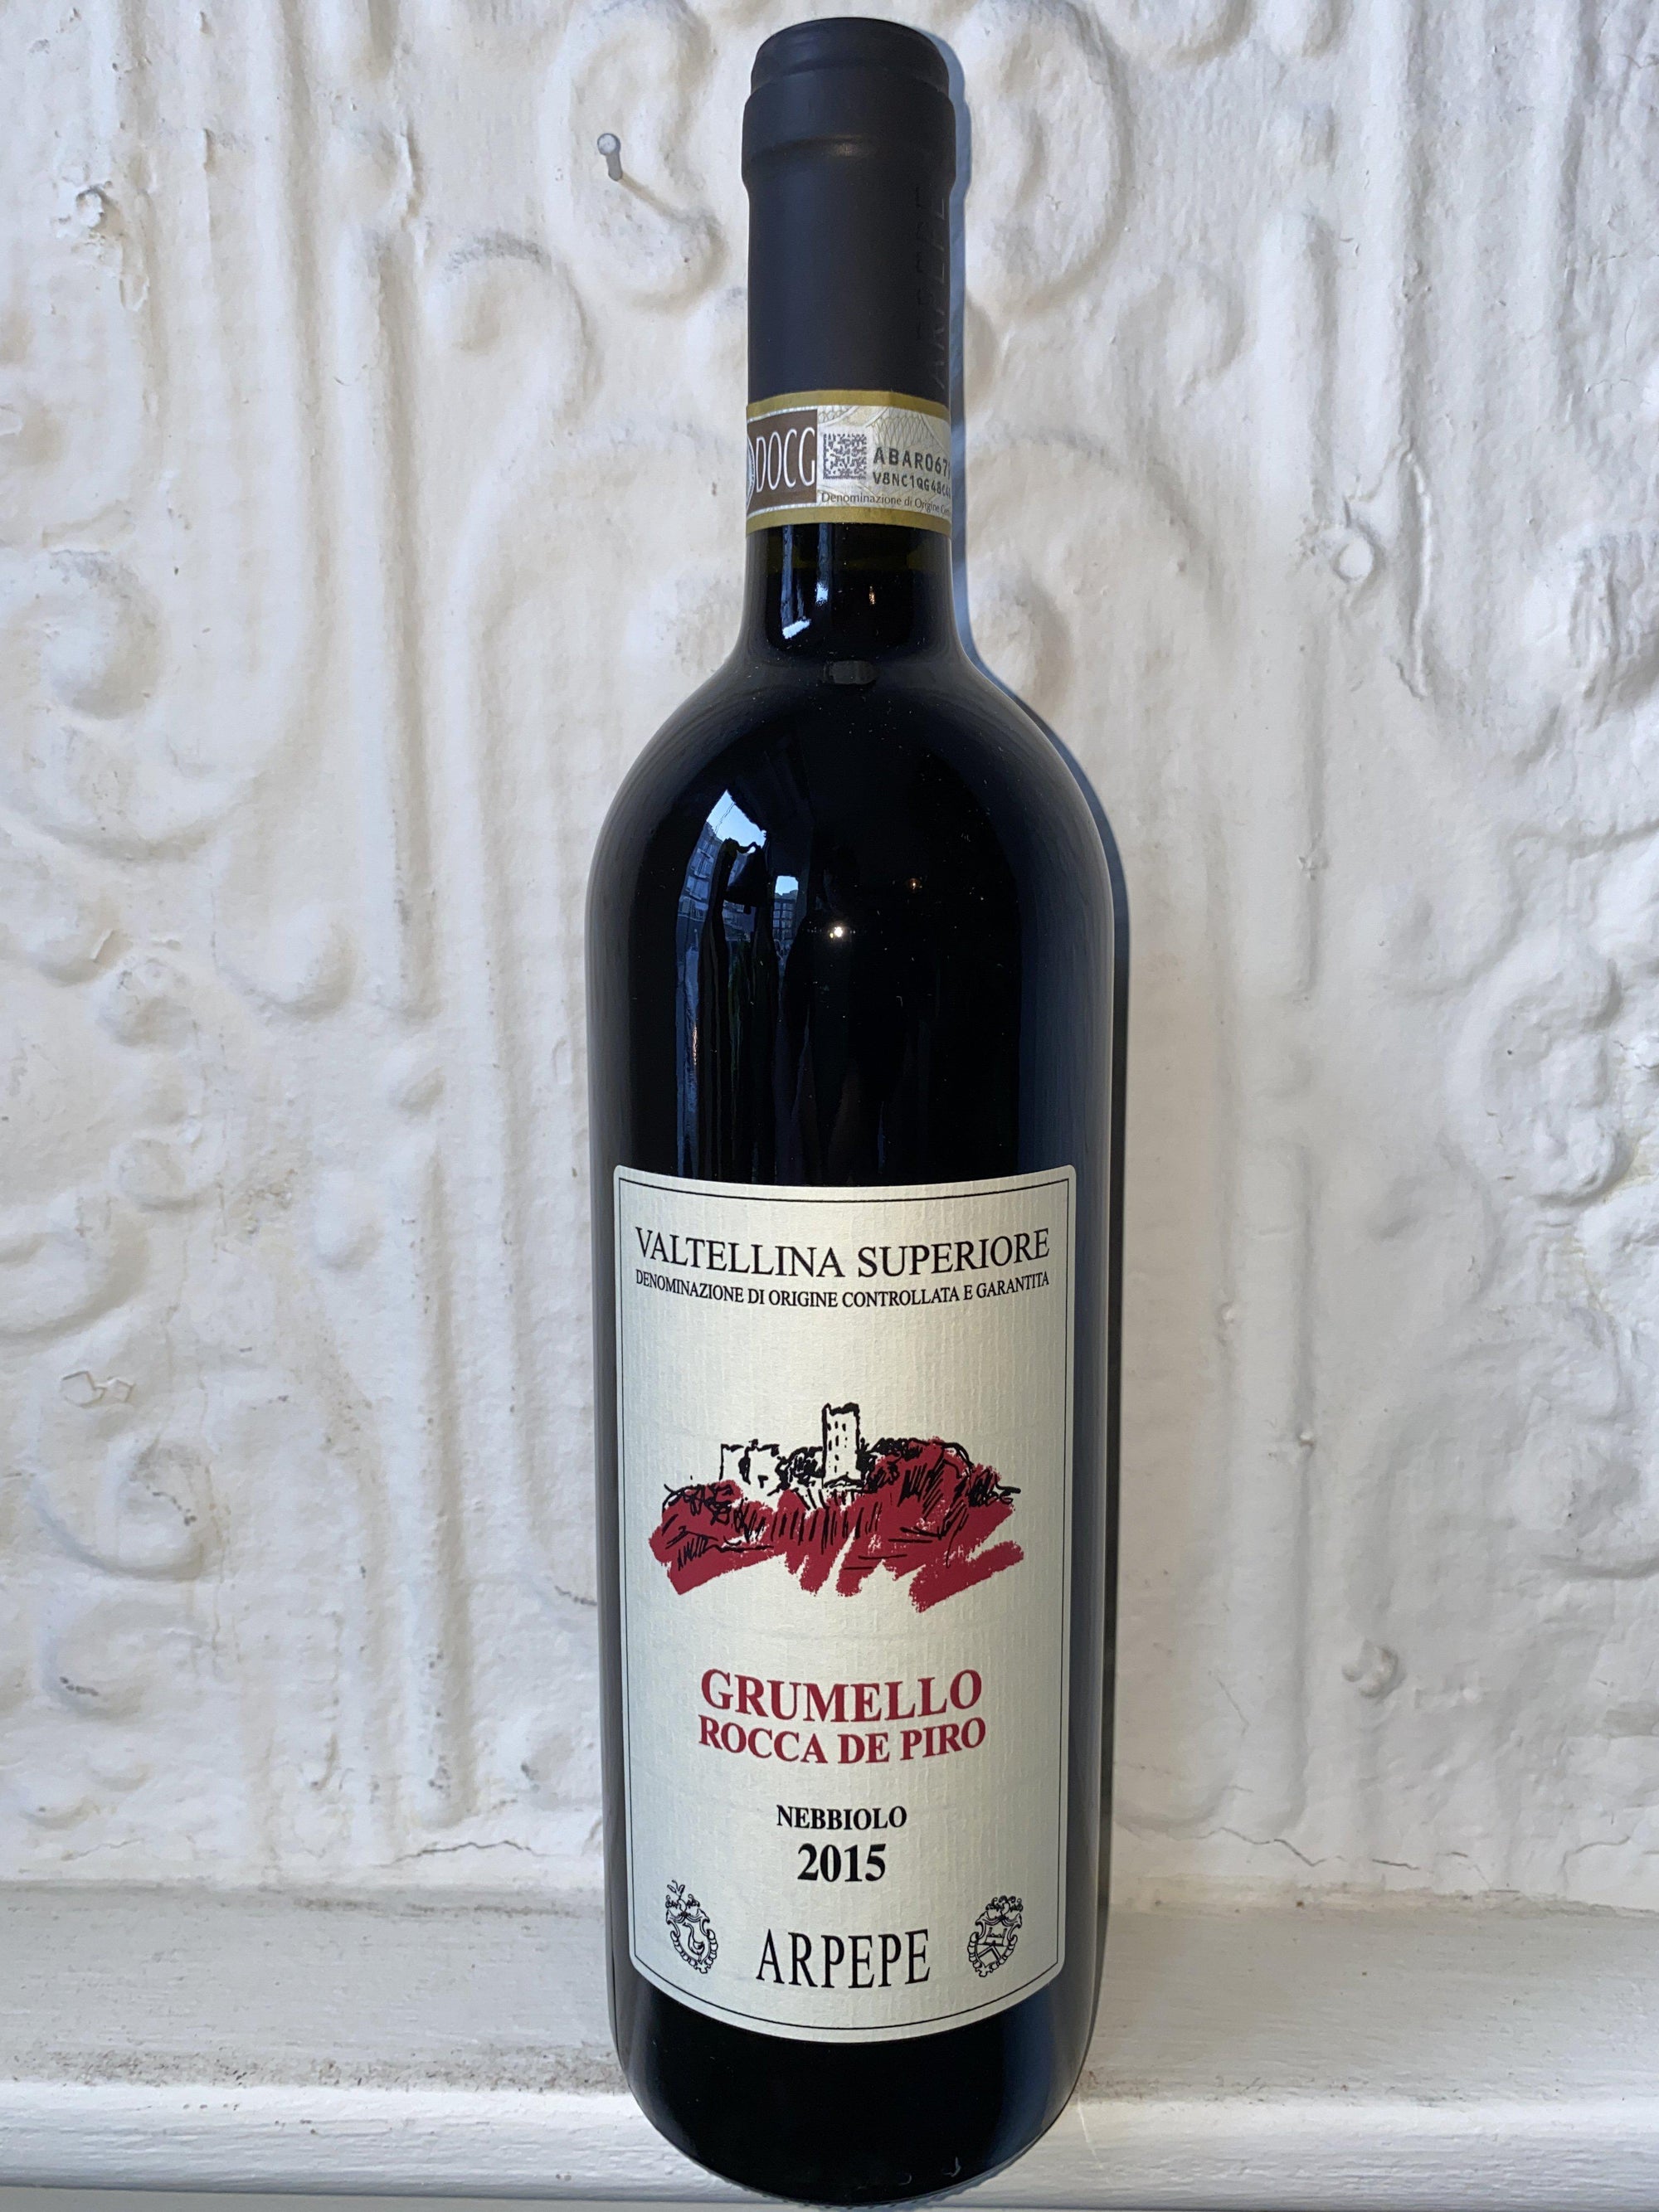 Grumello Rocca de Piro, Arpepe 2015 (Valtellina, Italy)-Wine-Bibber & Bell